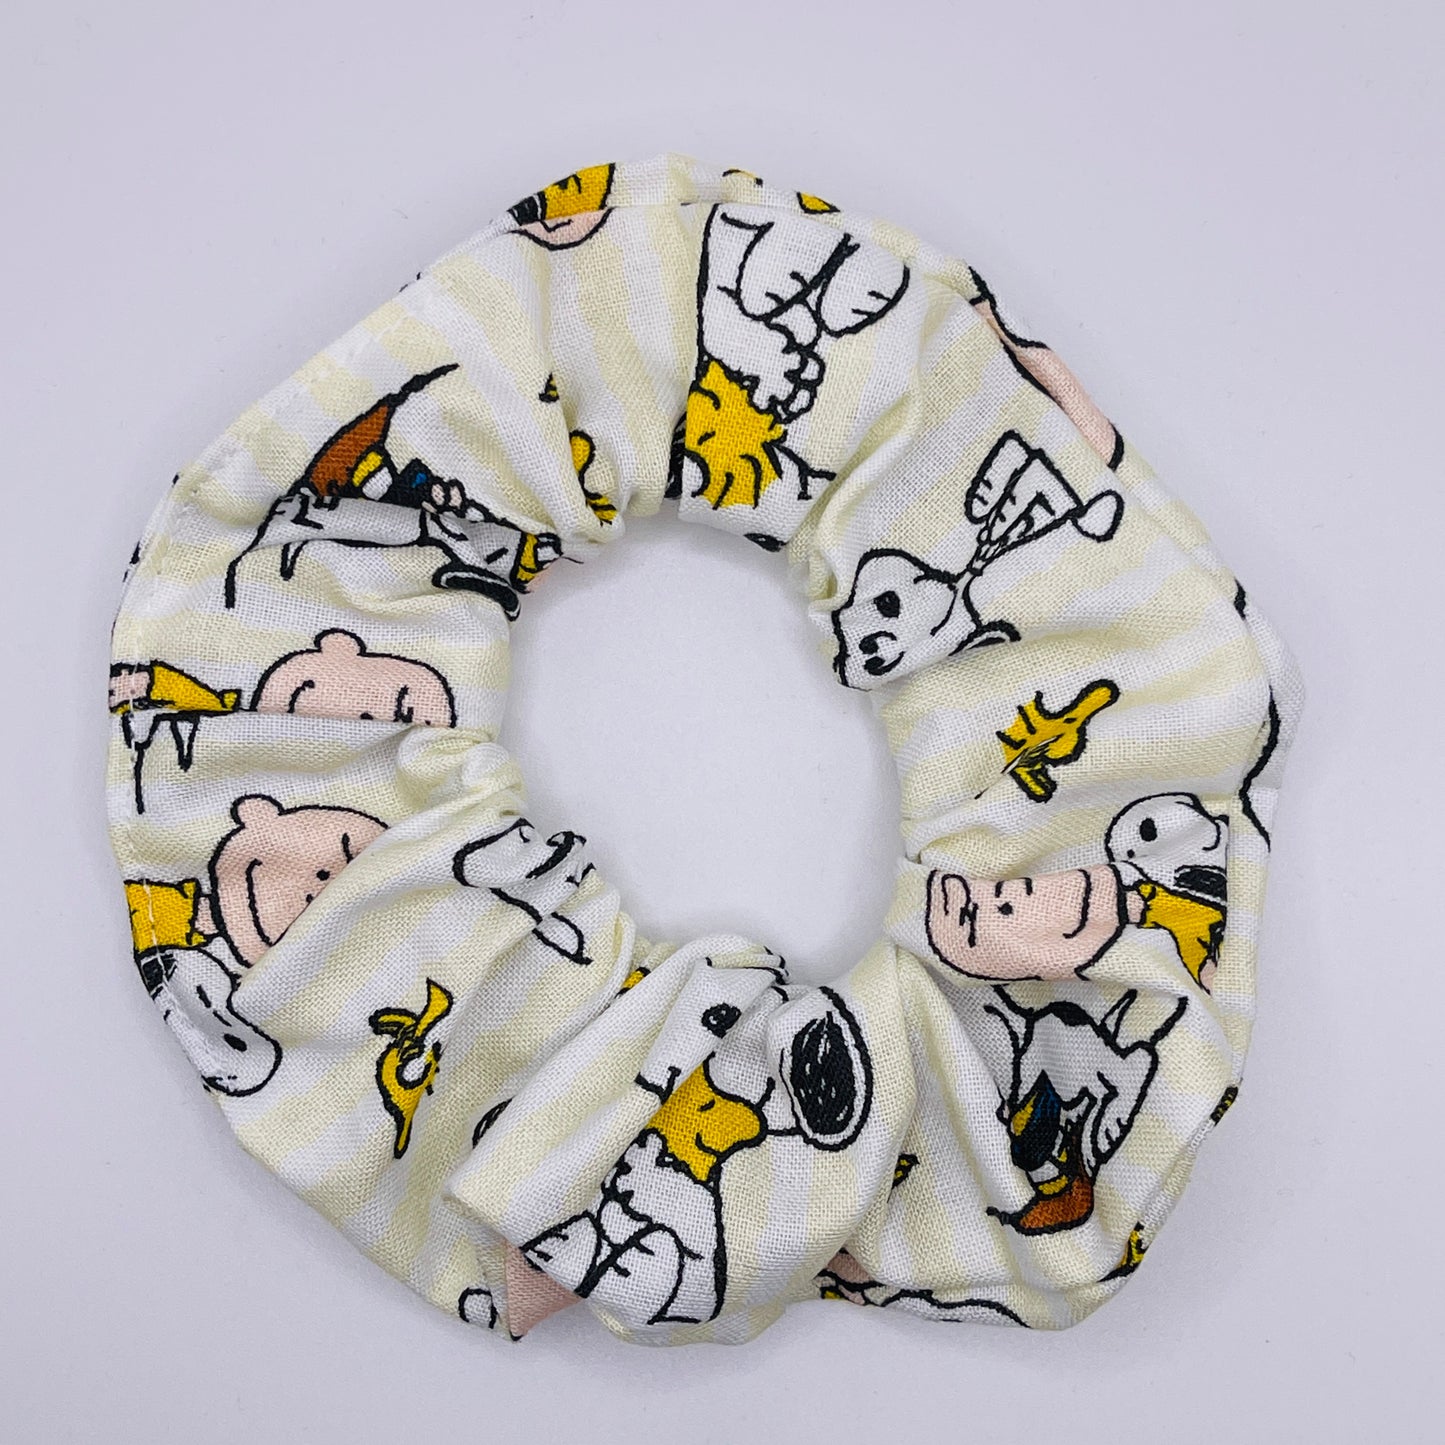 Charlie Brown & Snoopy Scrunchies!